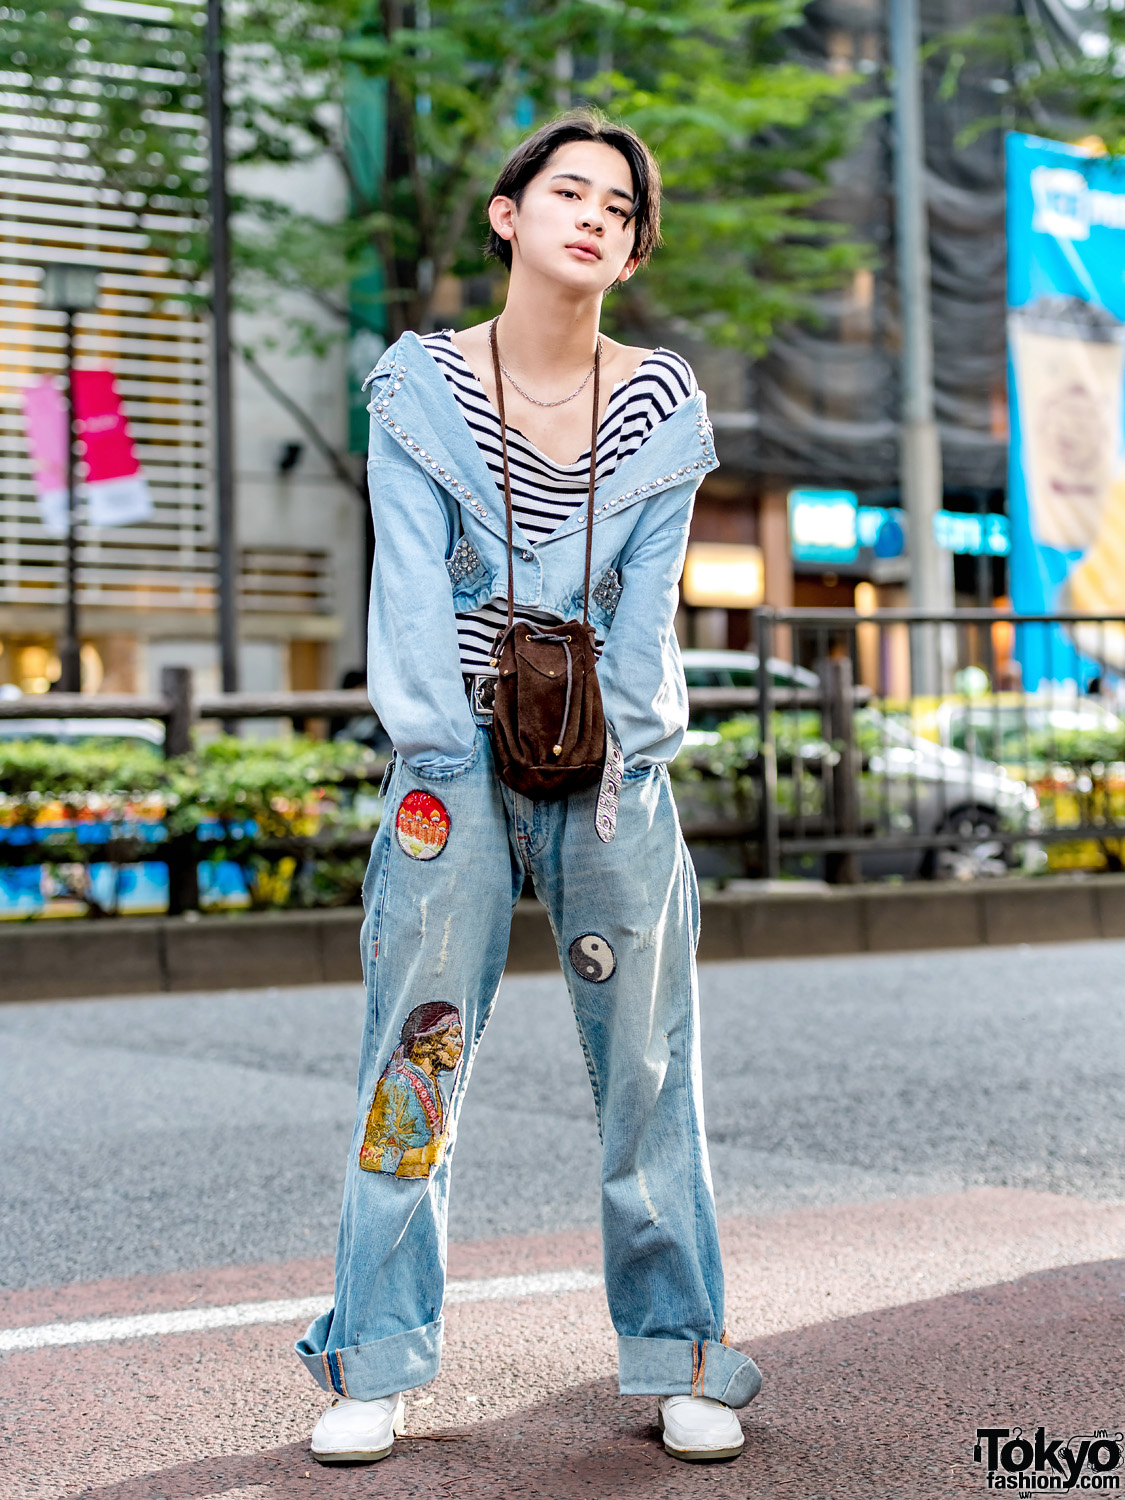 Harajuku Denim Street Style w/ Studded Cropped Jacket, Striped Top